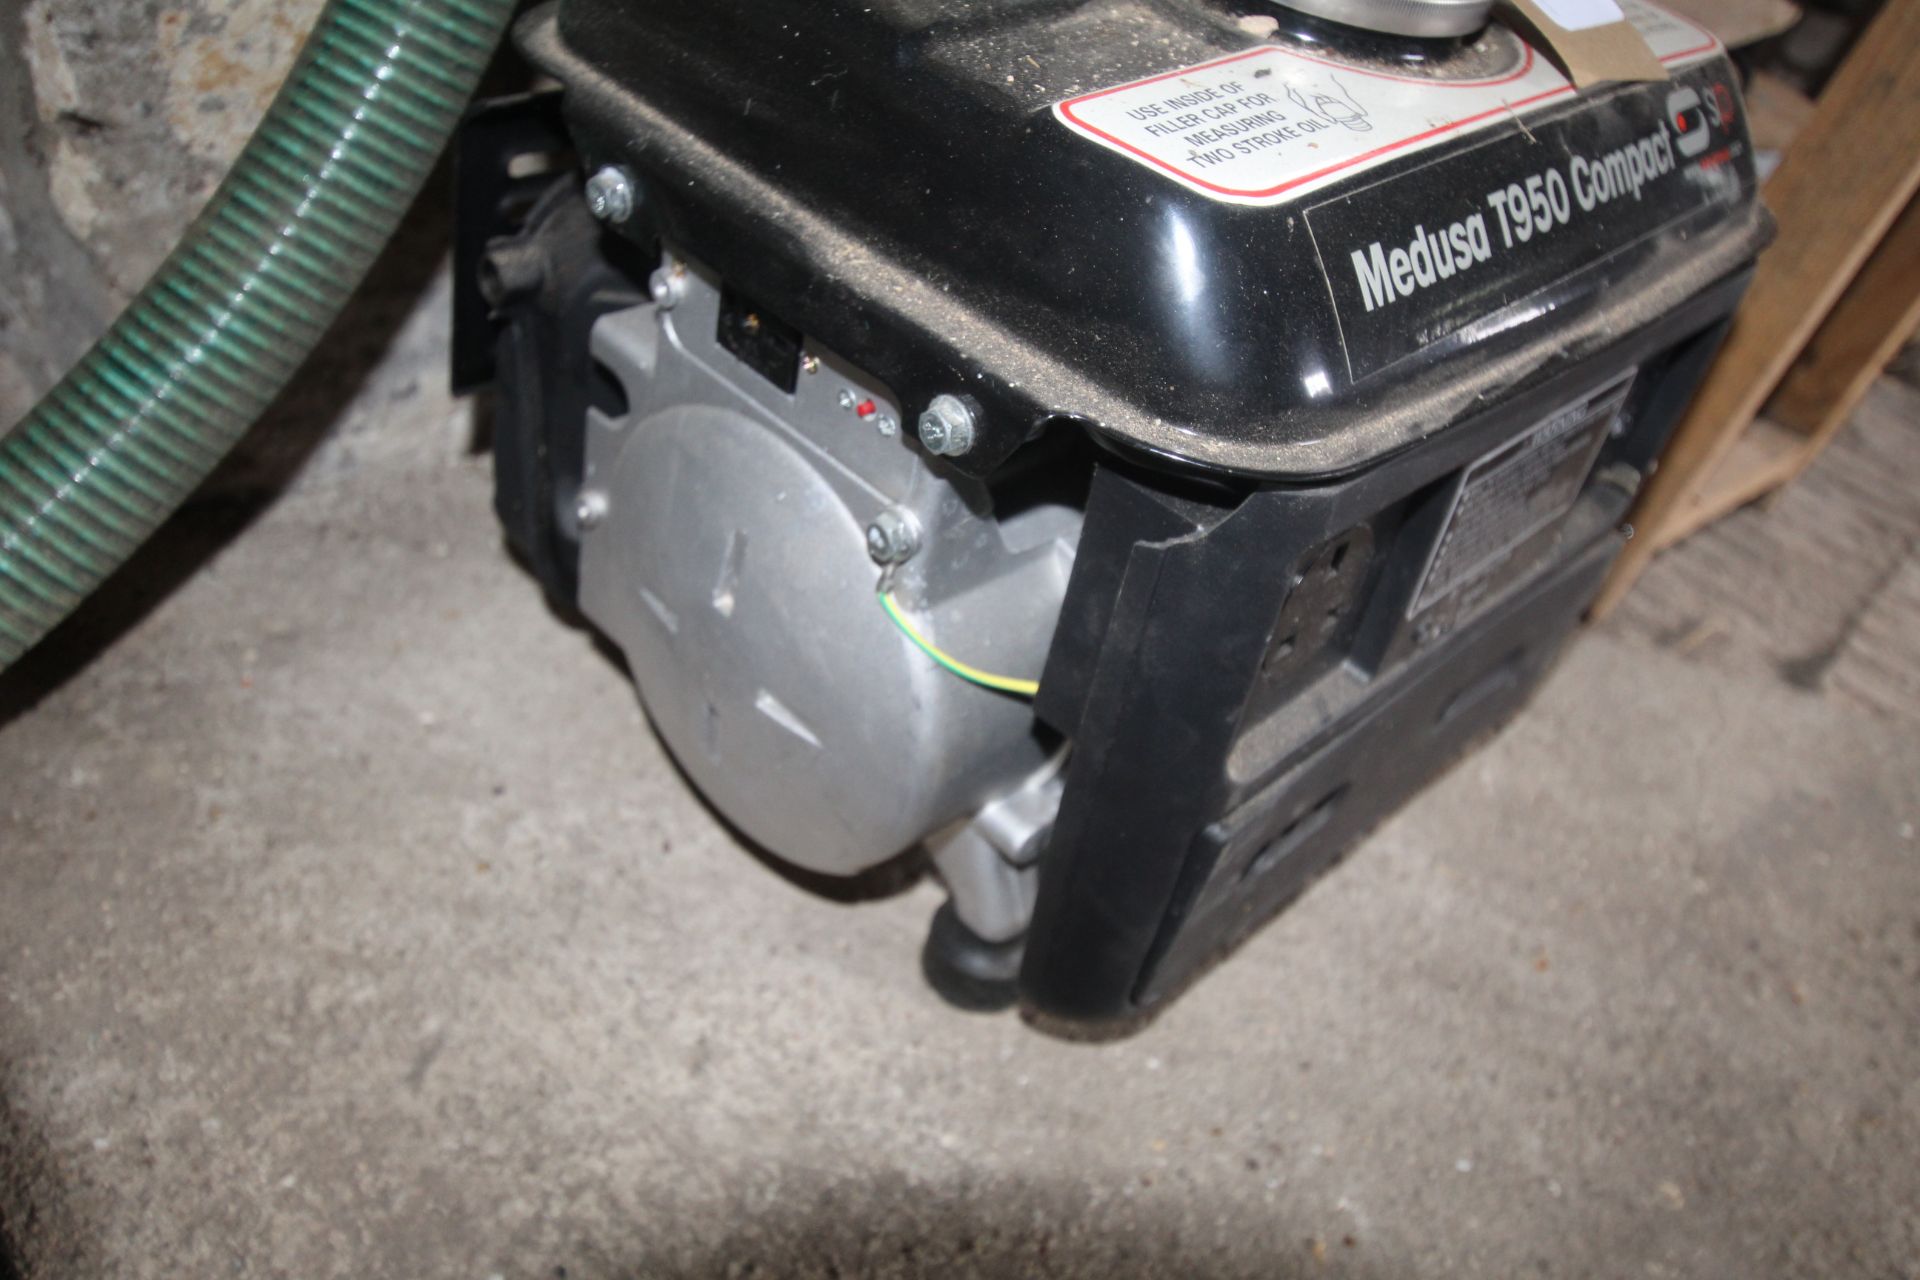 SIP Medusa 950 compact generator. - Image 2 of 3